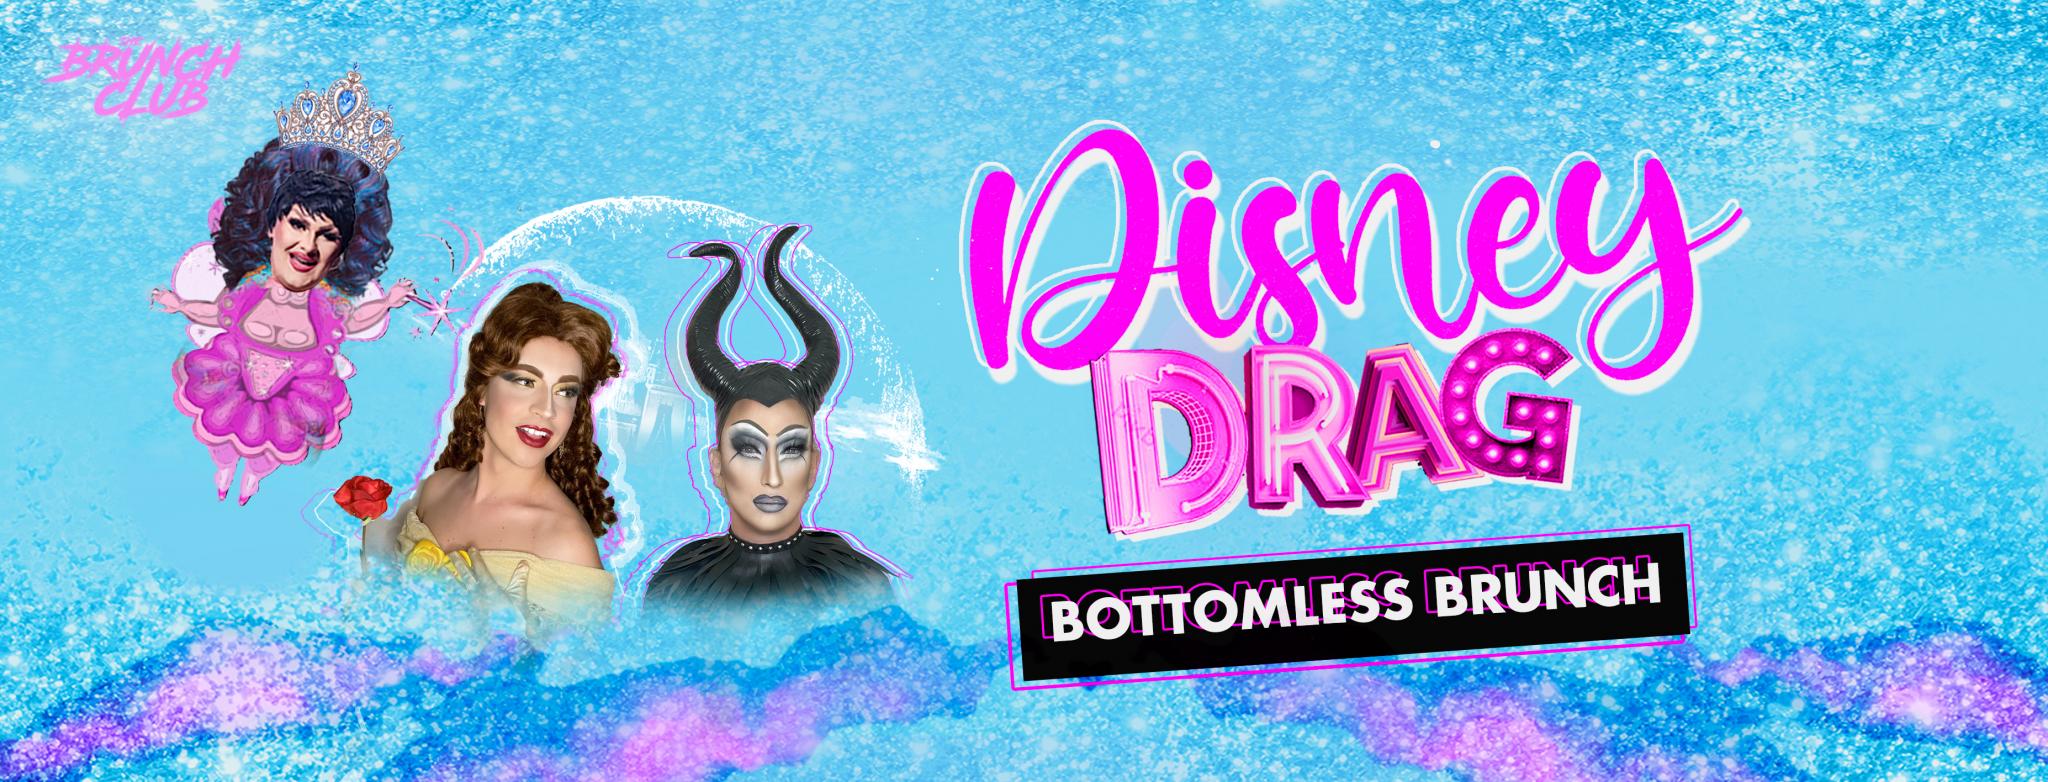 Disney Drag Bottomless Brunch - Manchester